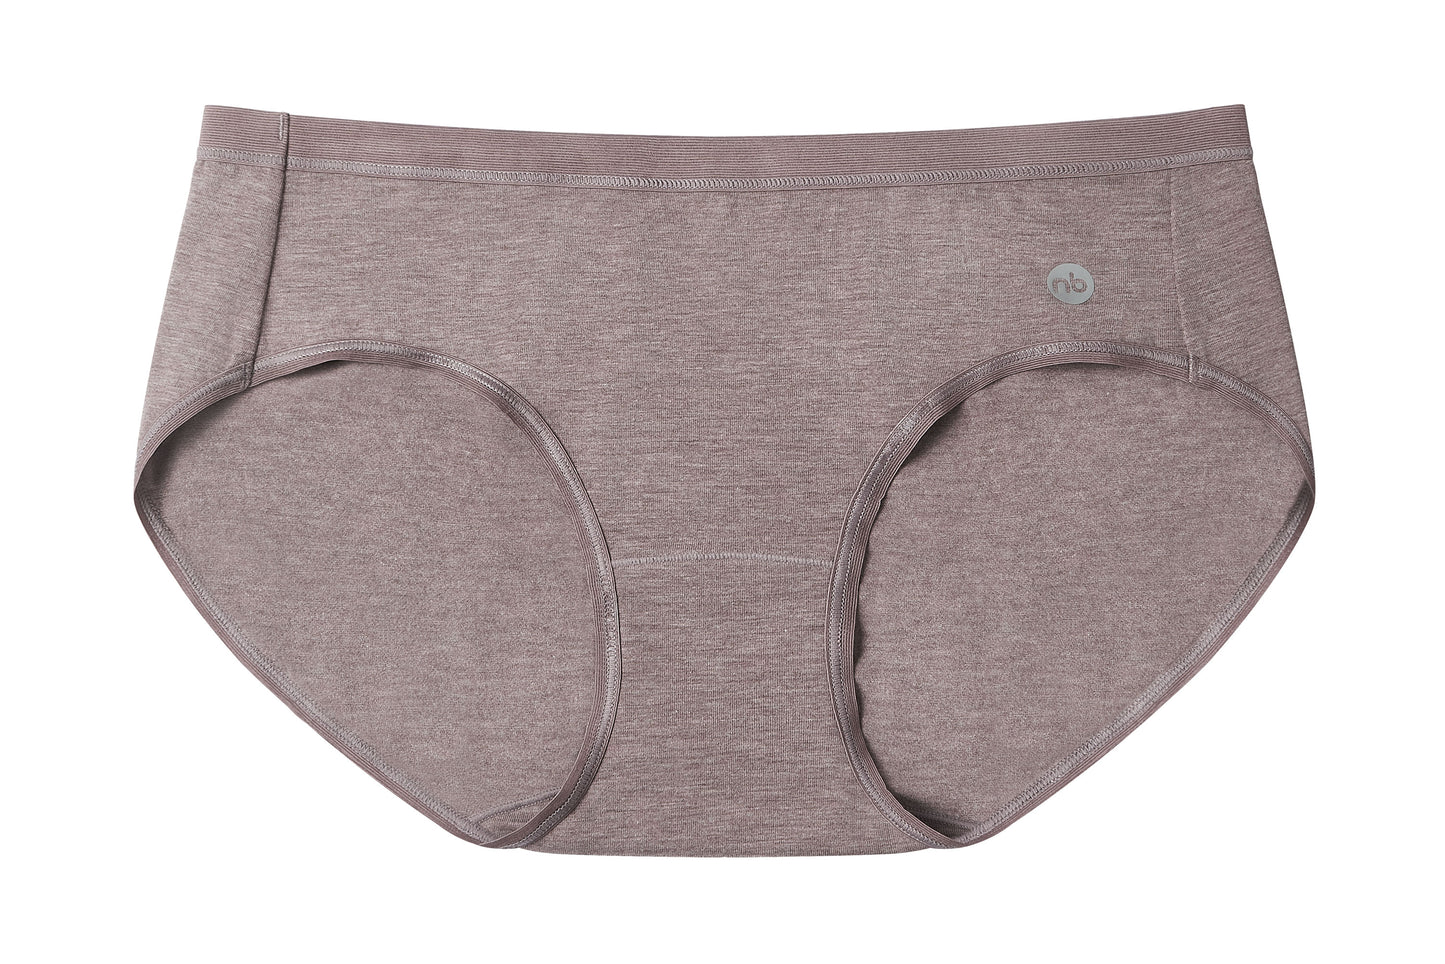 Basics Women's Bikini Underwear (Bamboo, 2 Pack) - Charcoal/Elderberry